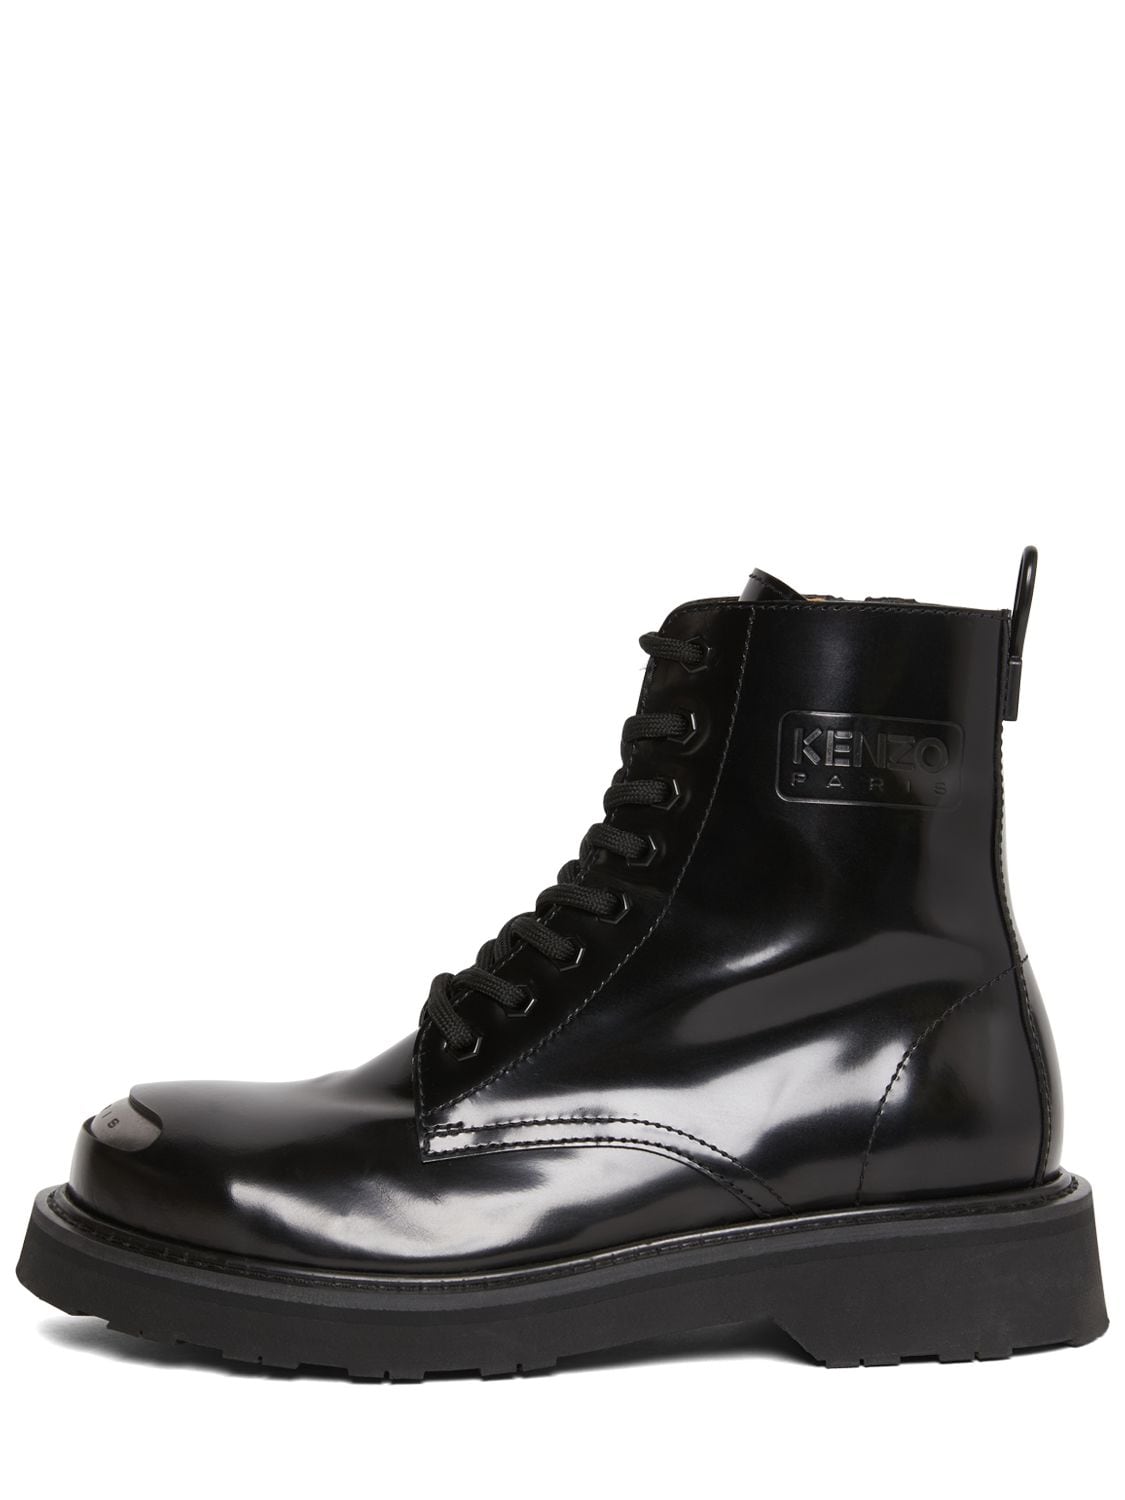 Kenzo Paris - 30mm kenzosmile leather ankle boots - Black | Luisaviaroma